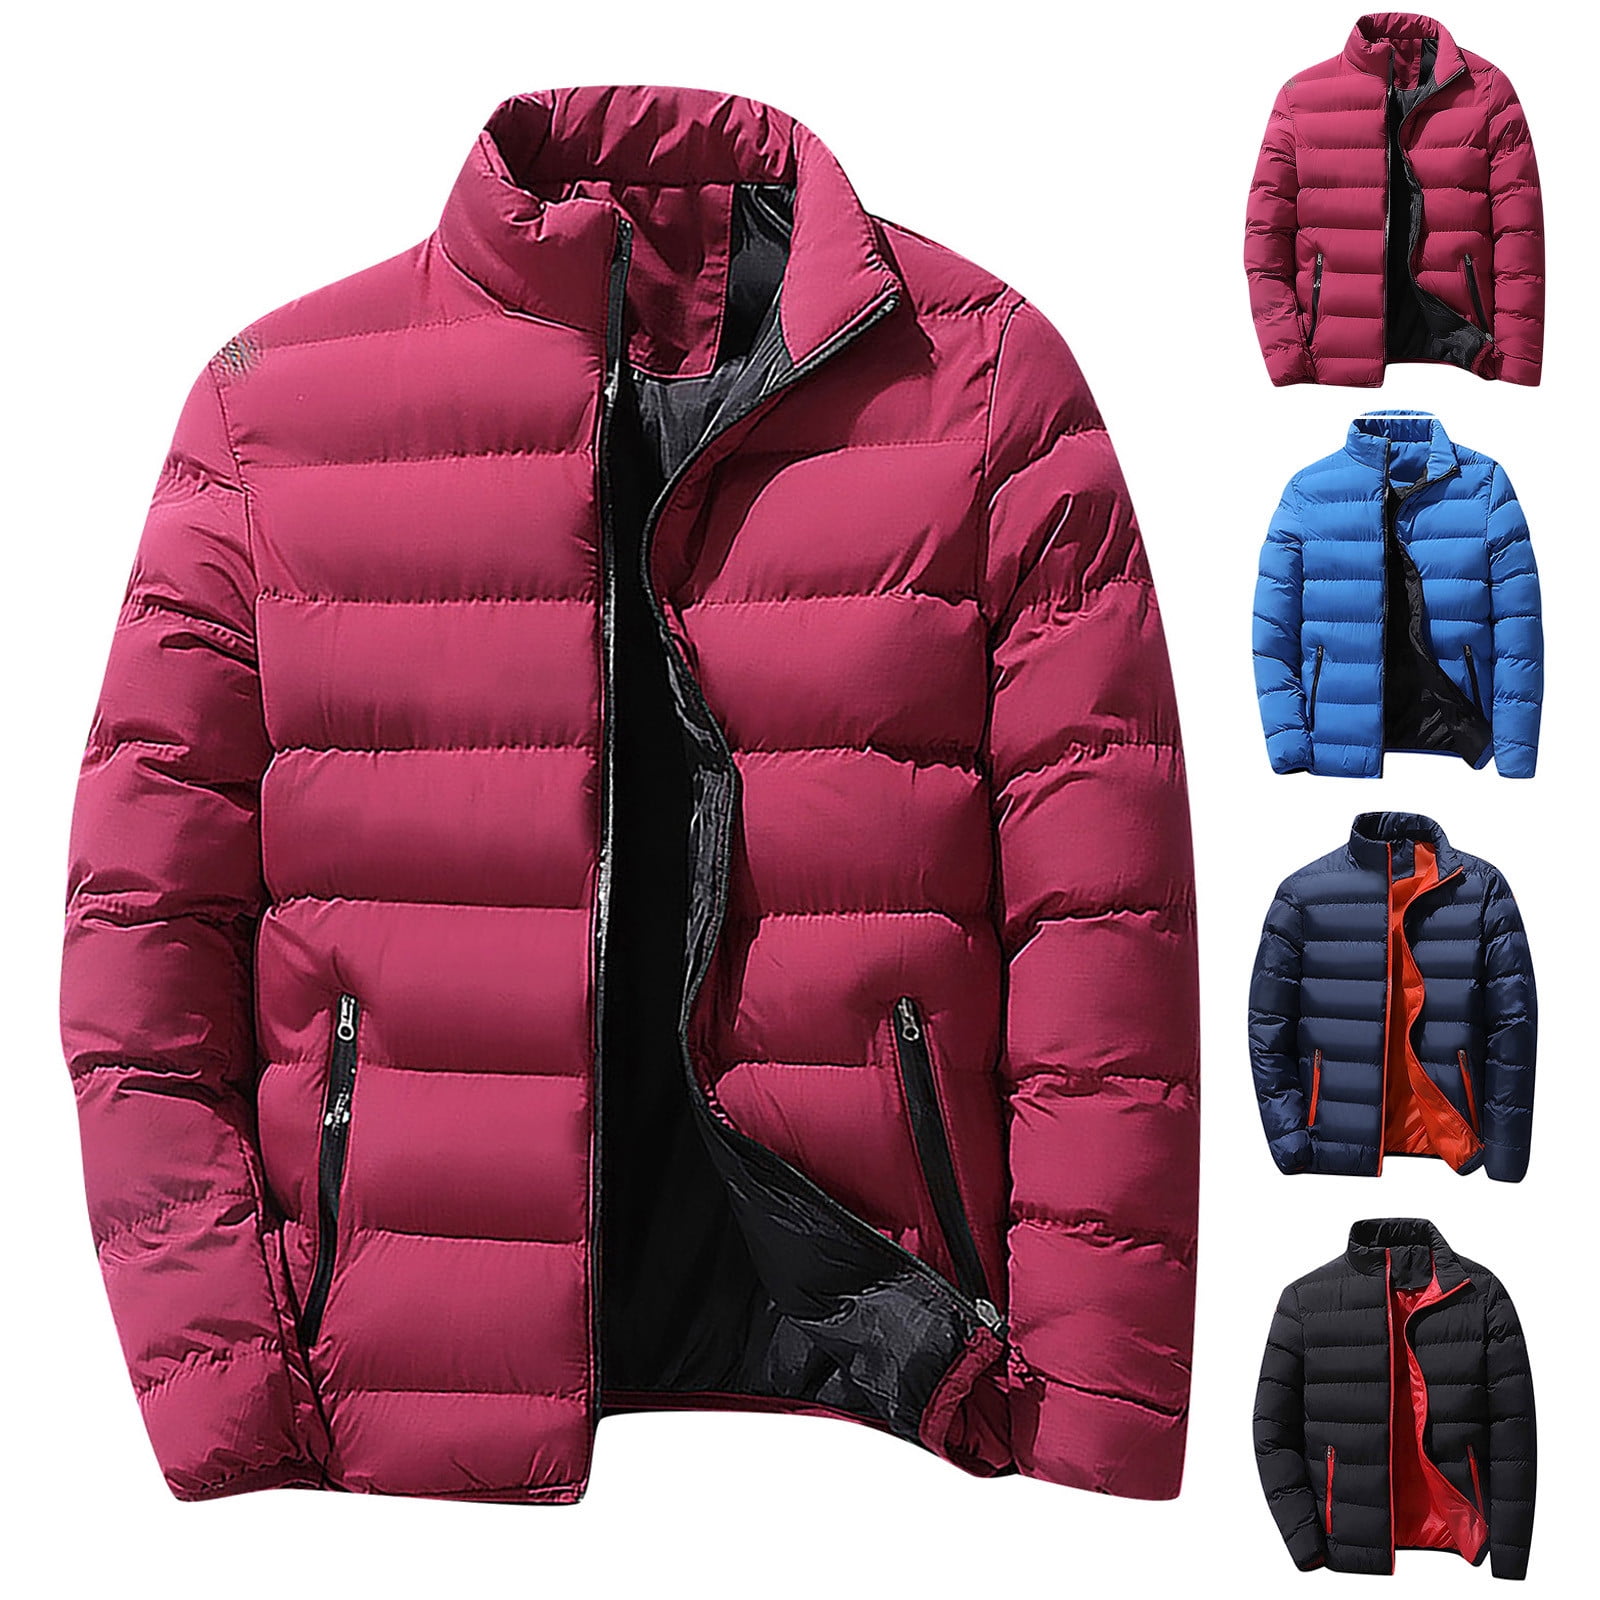 Autumn Winter Men's Packable Down Jacket Hooded Lightweight Winter Coat  Warm Puffer Jacket Water Res…See more Autumn Winter Men's Packable Down  Jacket